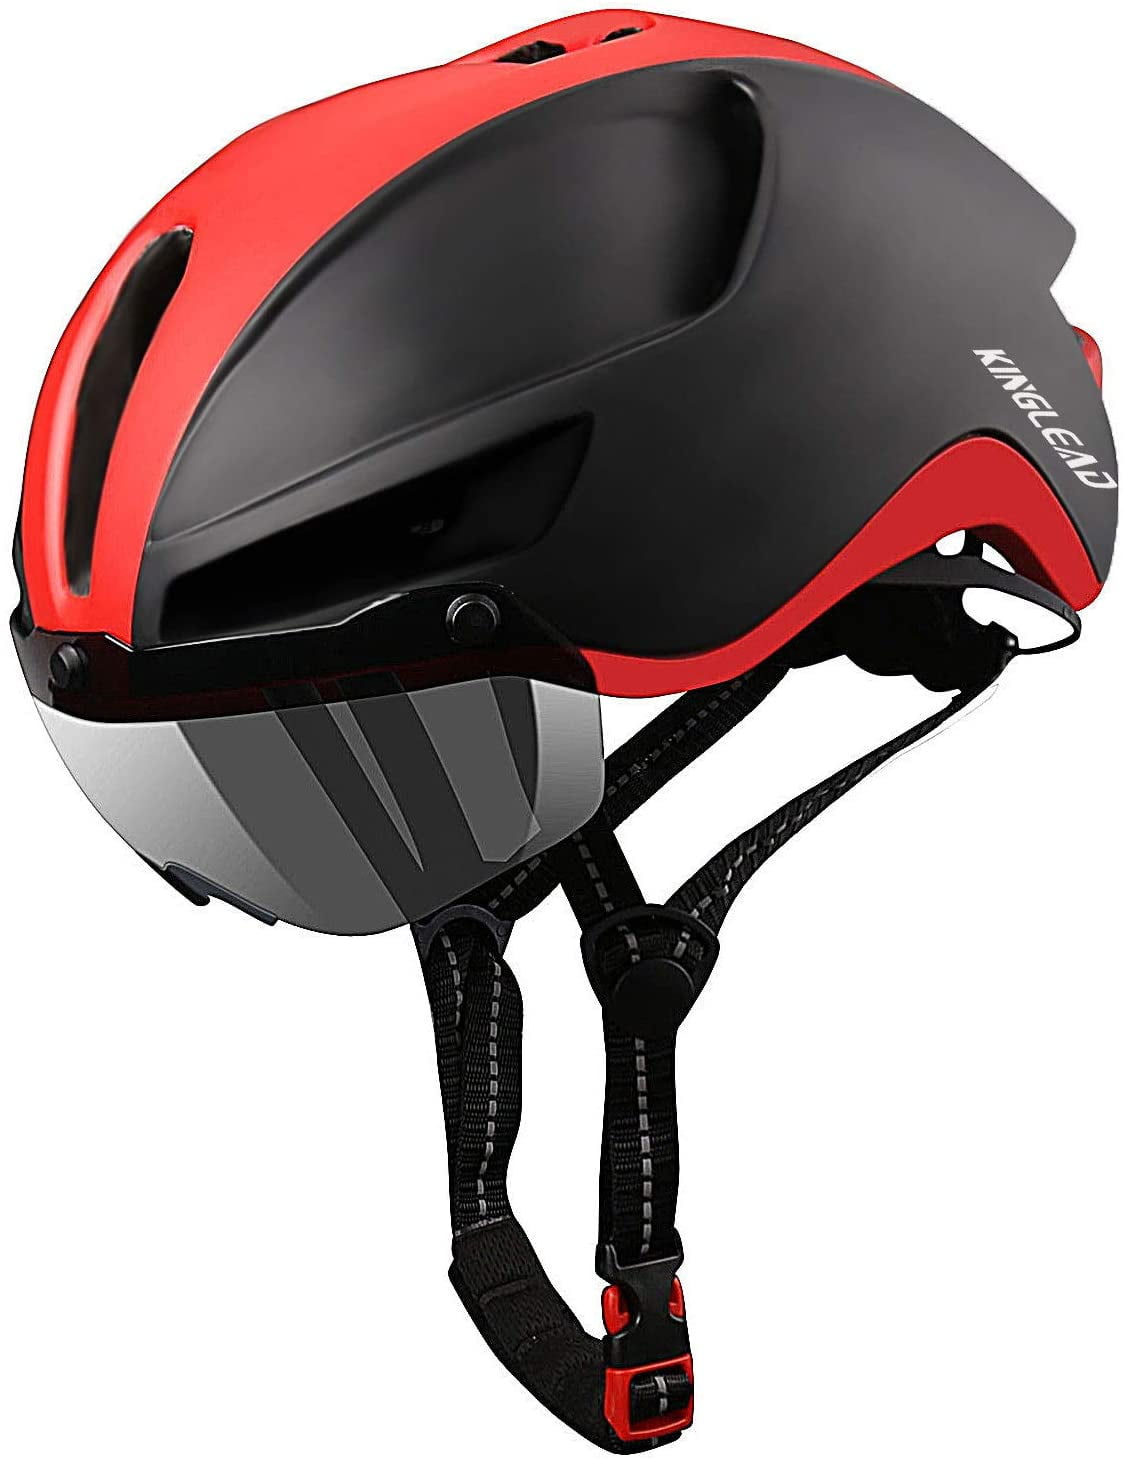 Adult Bike Helmet Cover Women Men Bicycle Helmet with Magnetic Goggles 57-62cm 